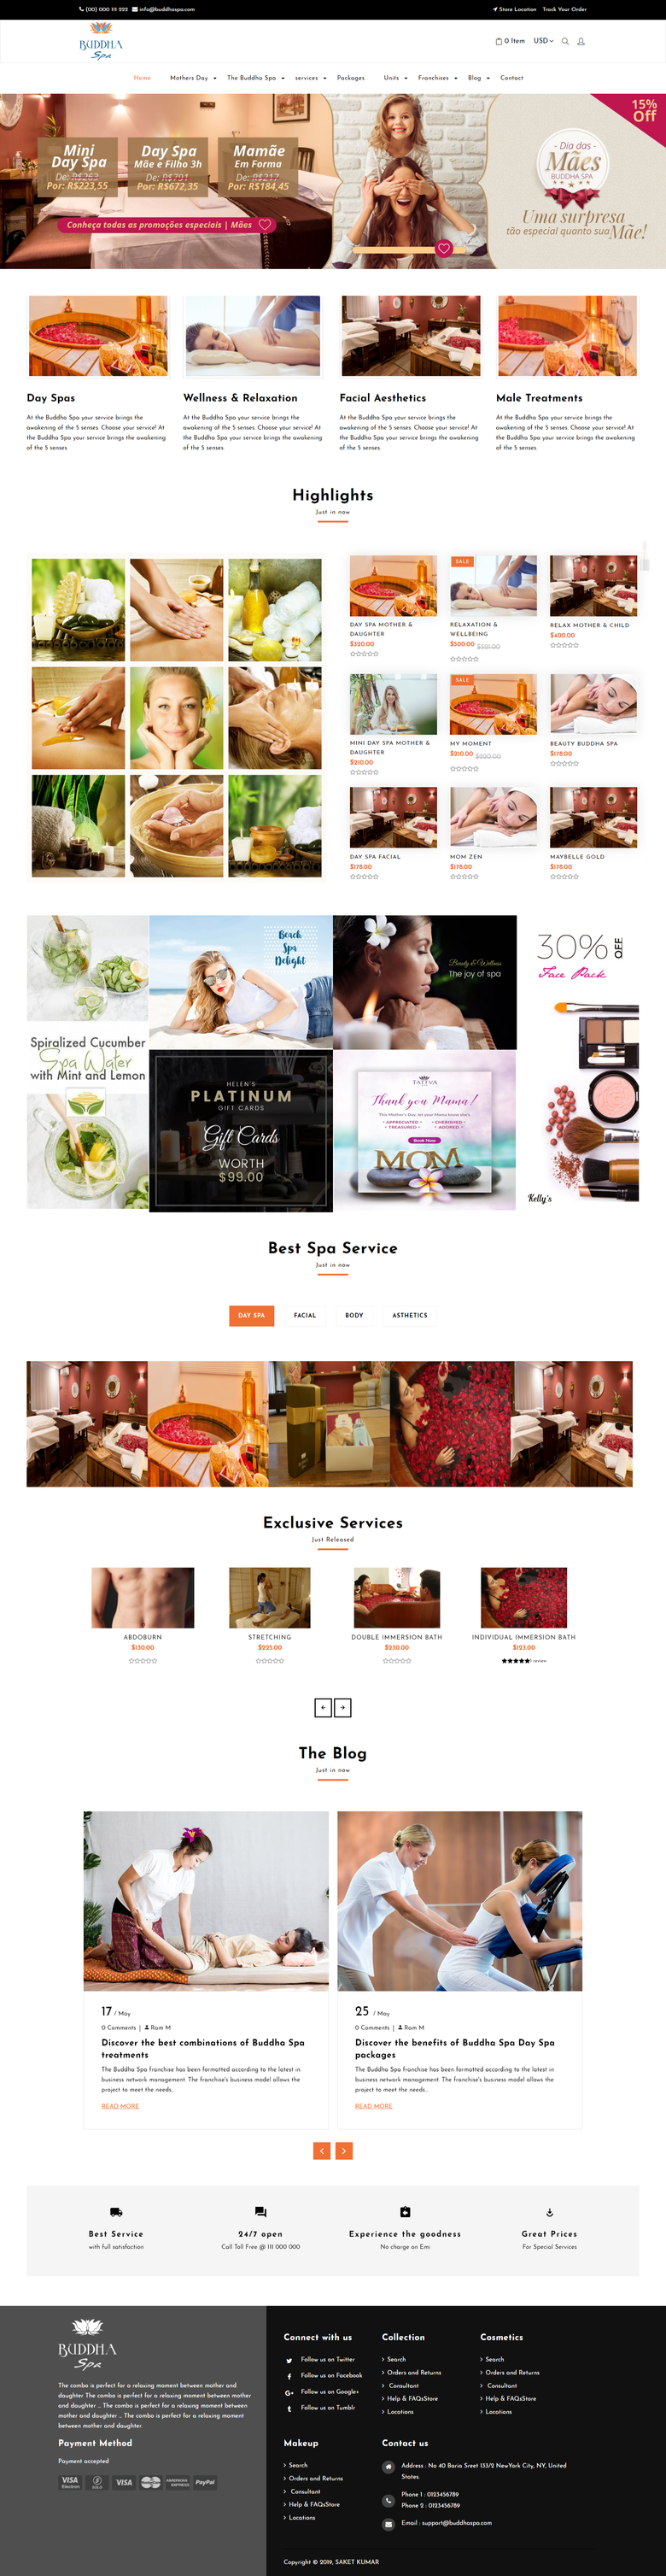 e-Commerce spa business website design